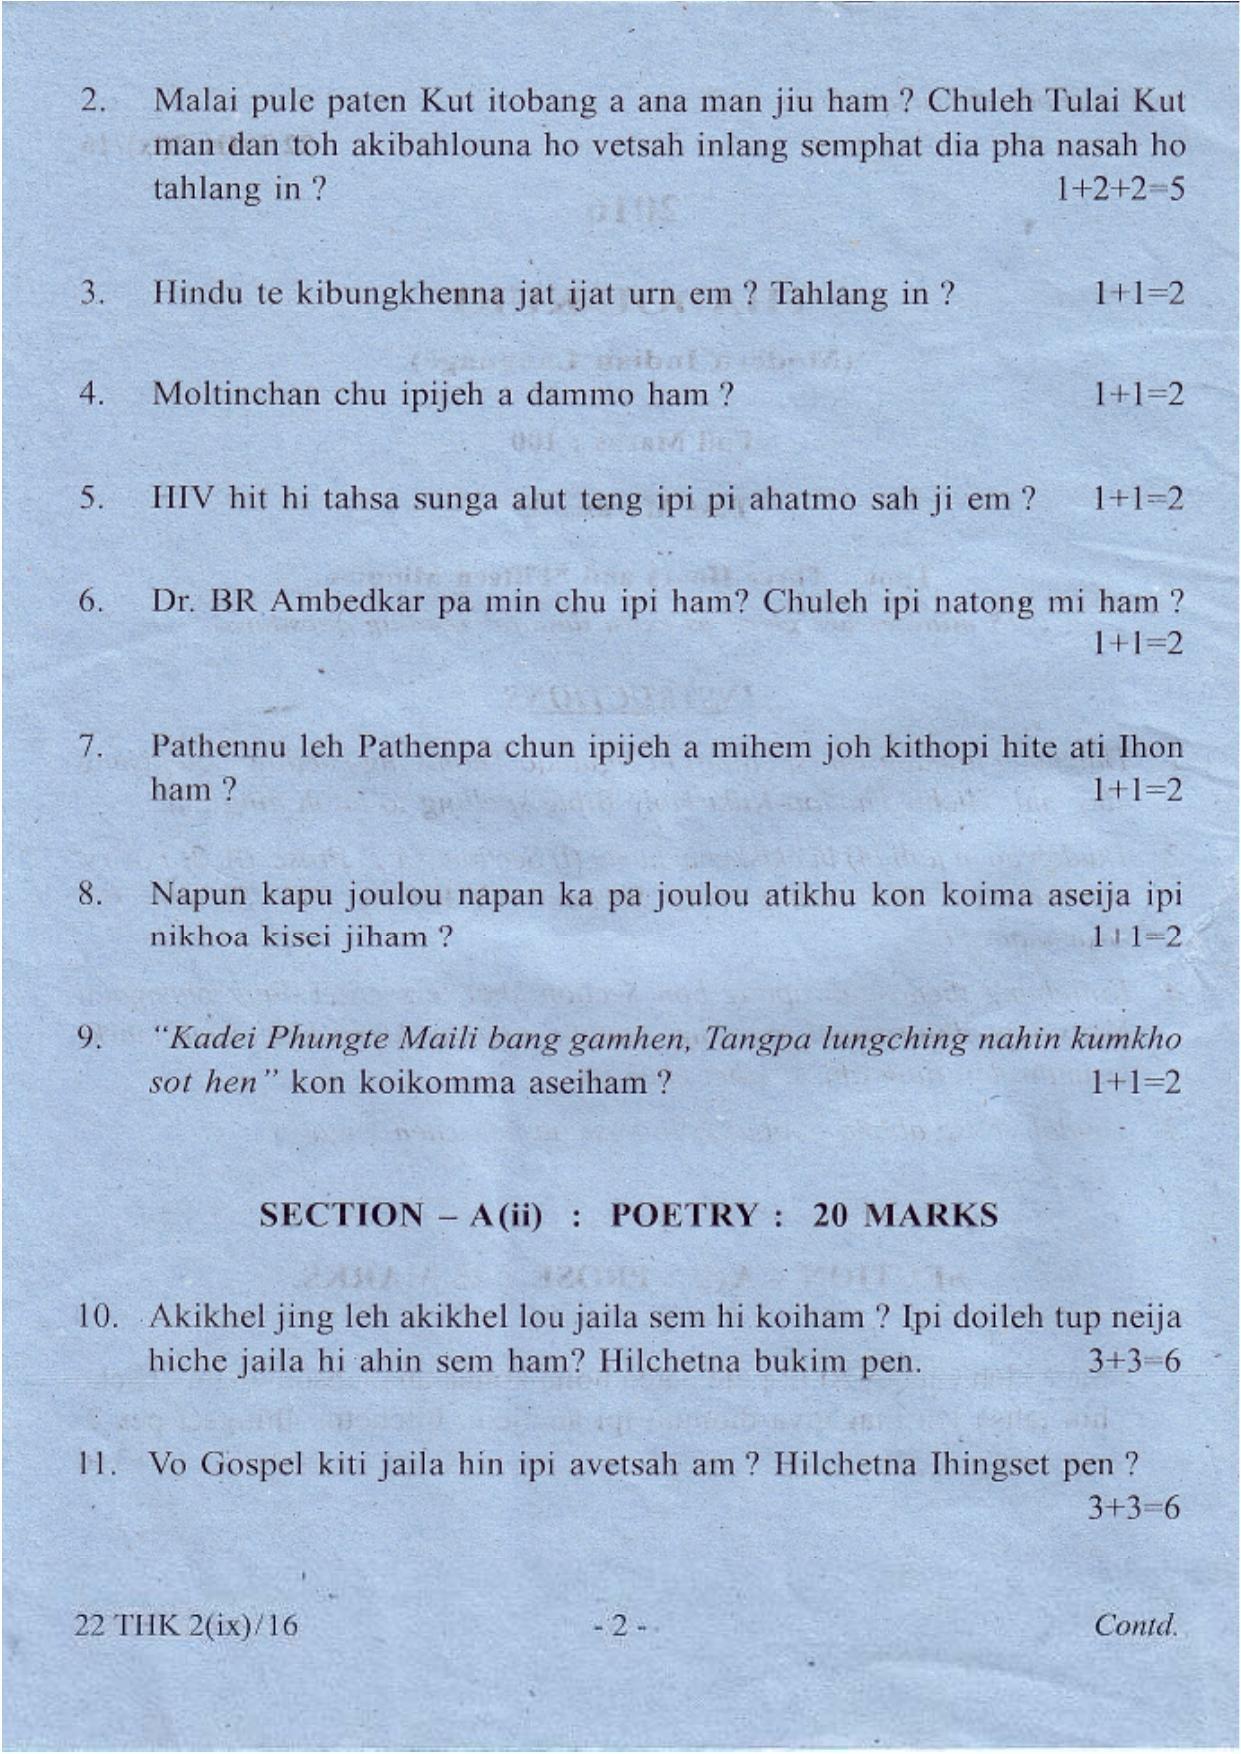 COHSEM Class 12 Thadou Kuki (M.I.L.) 2016 Question Papers - Page 2